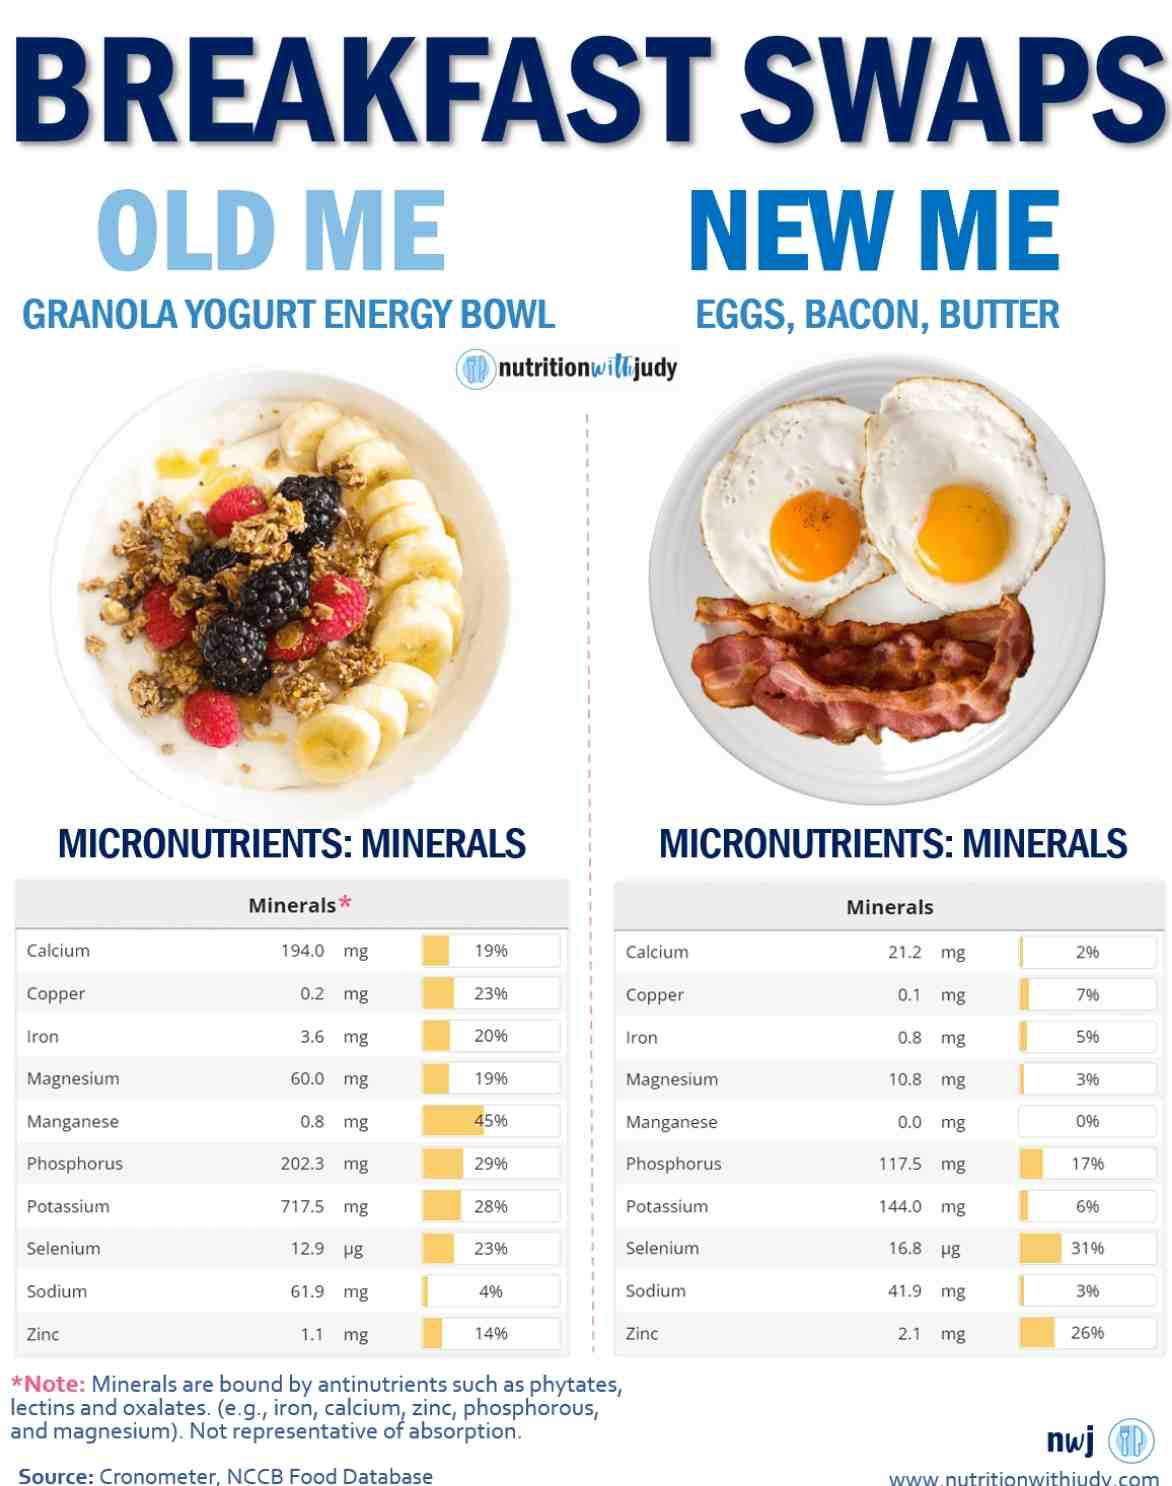 Breakfast Swaps Comparison - Minerals